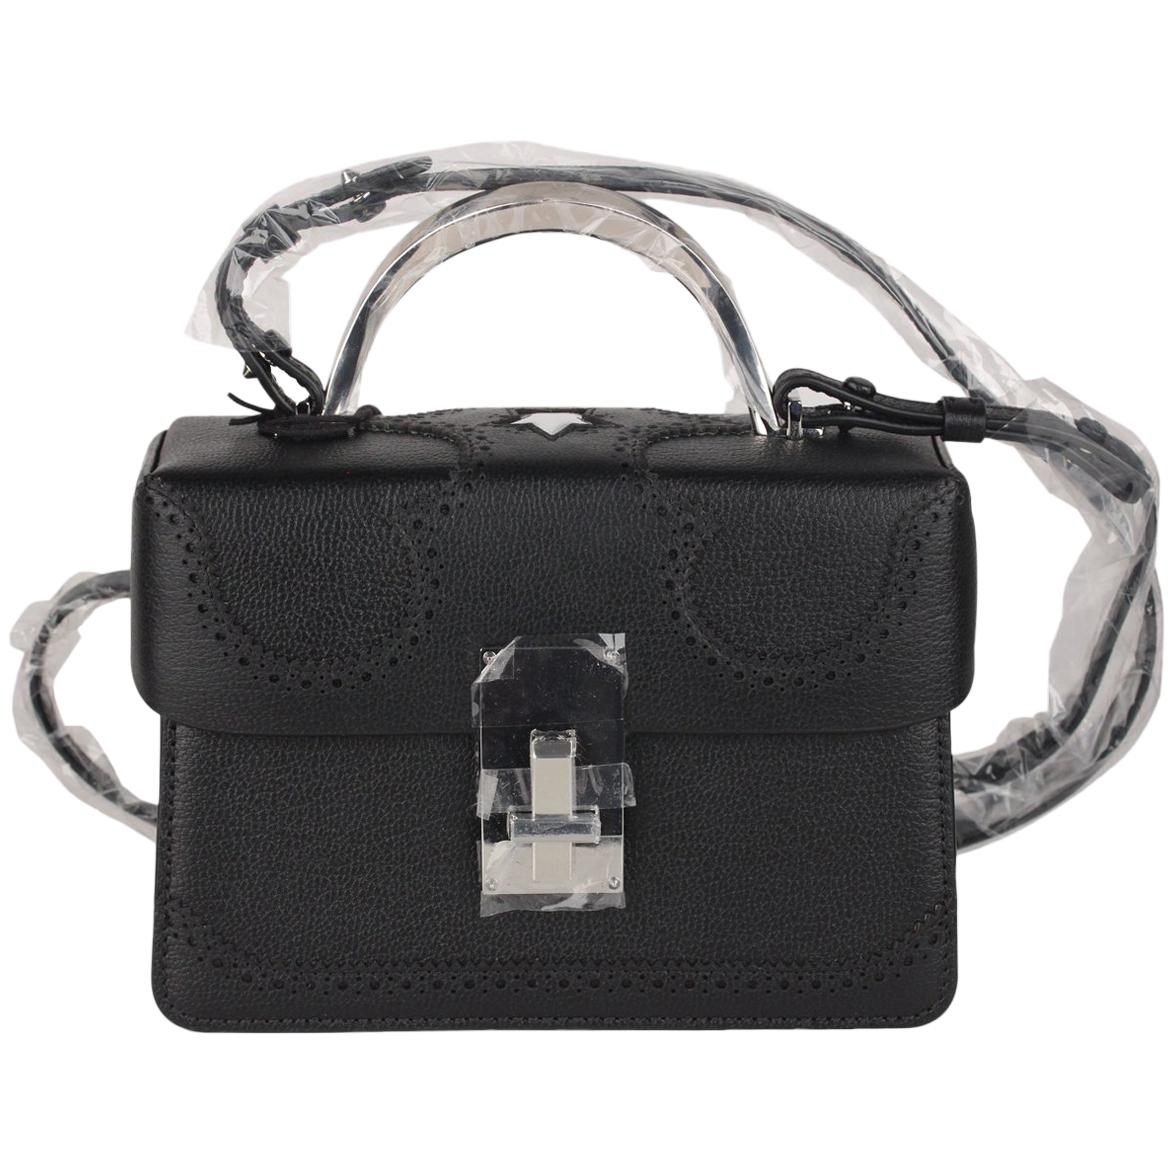 The Volon Black Leather Data Alice Small Crossbody Shoulder Box Bag Handbag